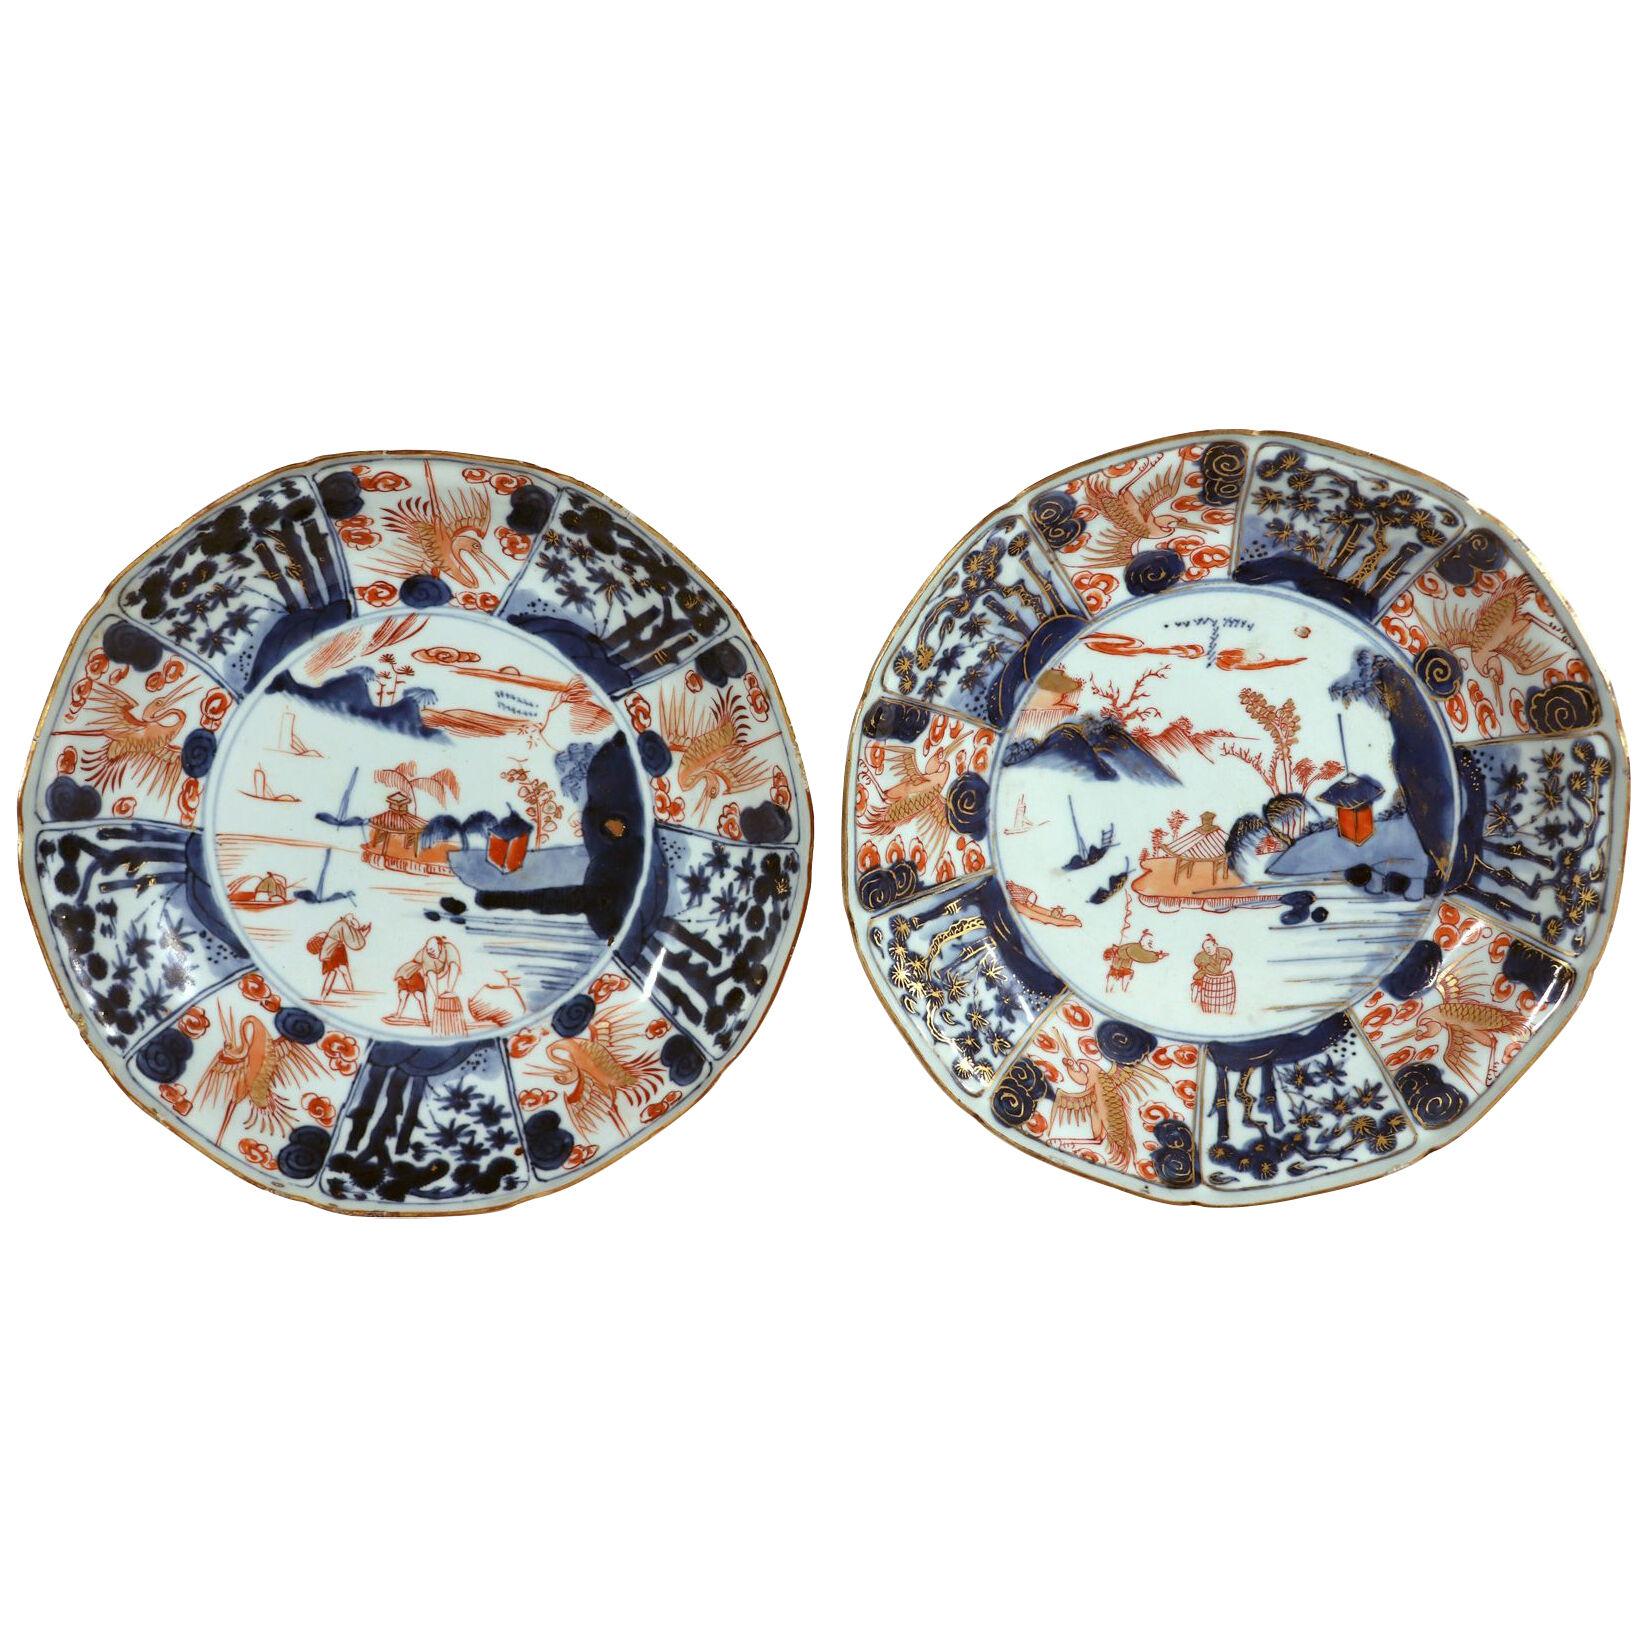 Chinese Export Porcelain Imari Dishes